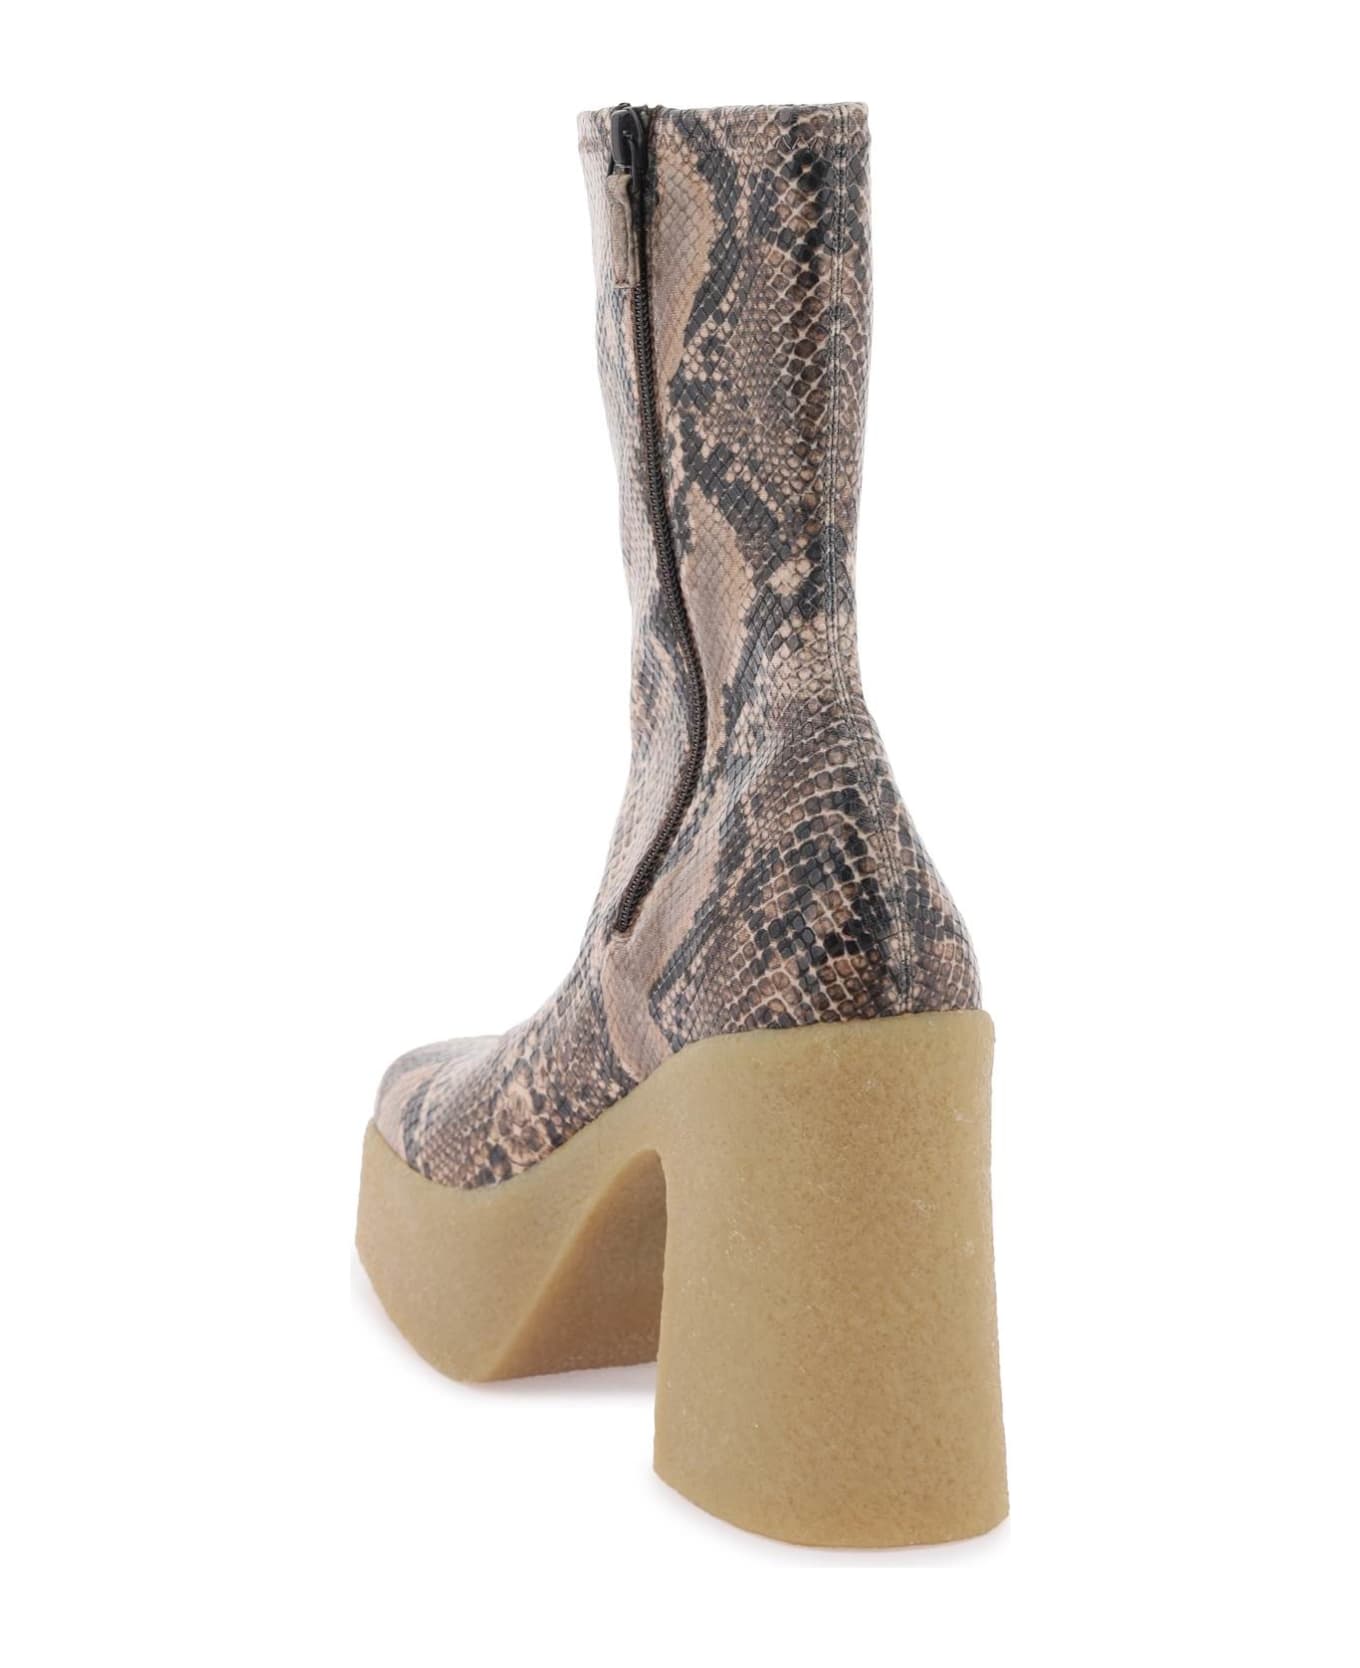 Stella McCartney Skyla Wedge Ankle Boots - Python